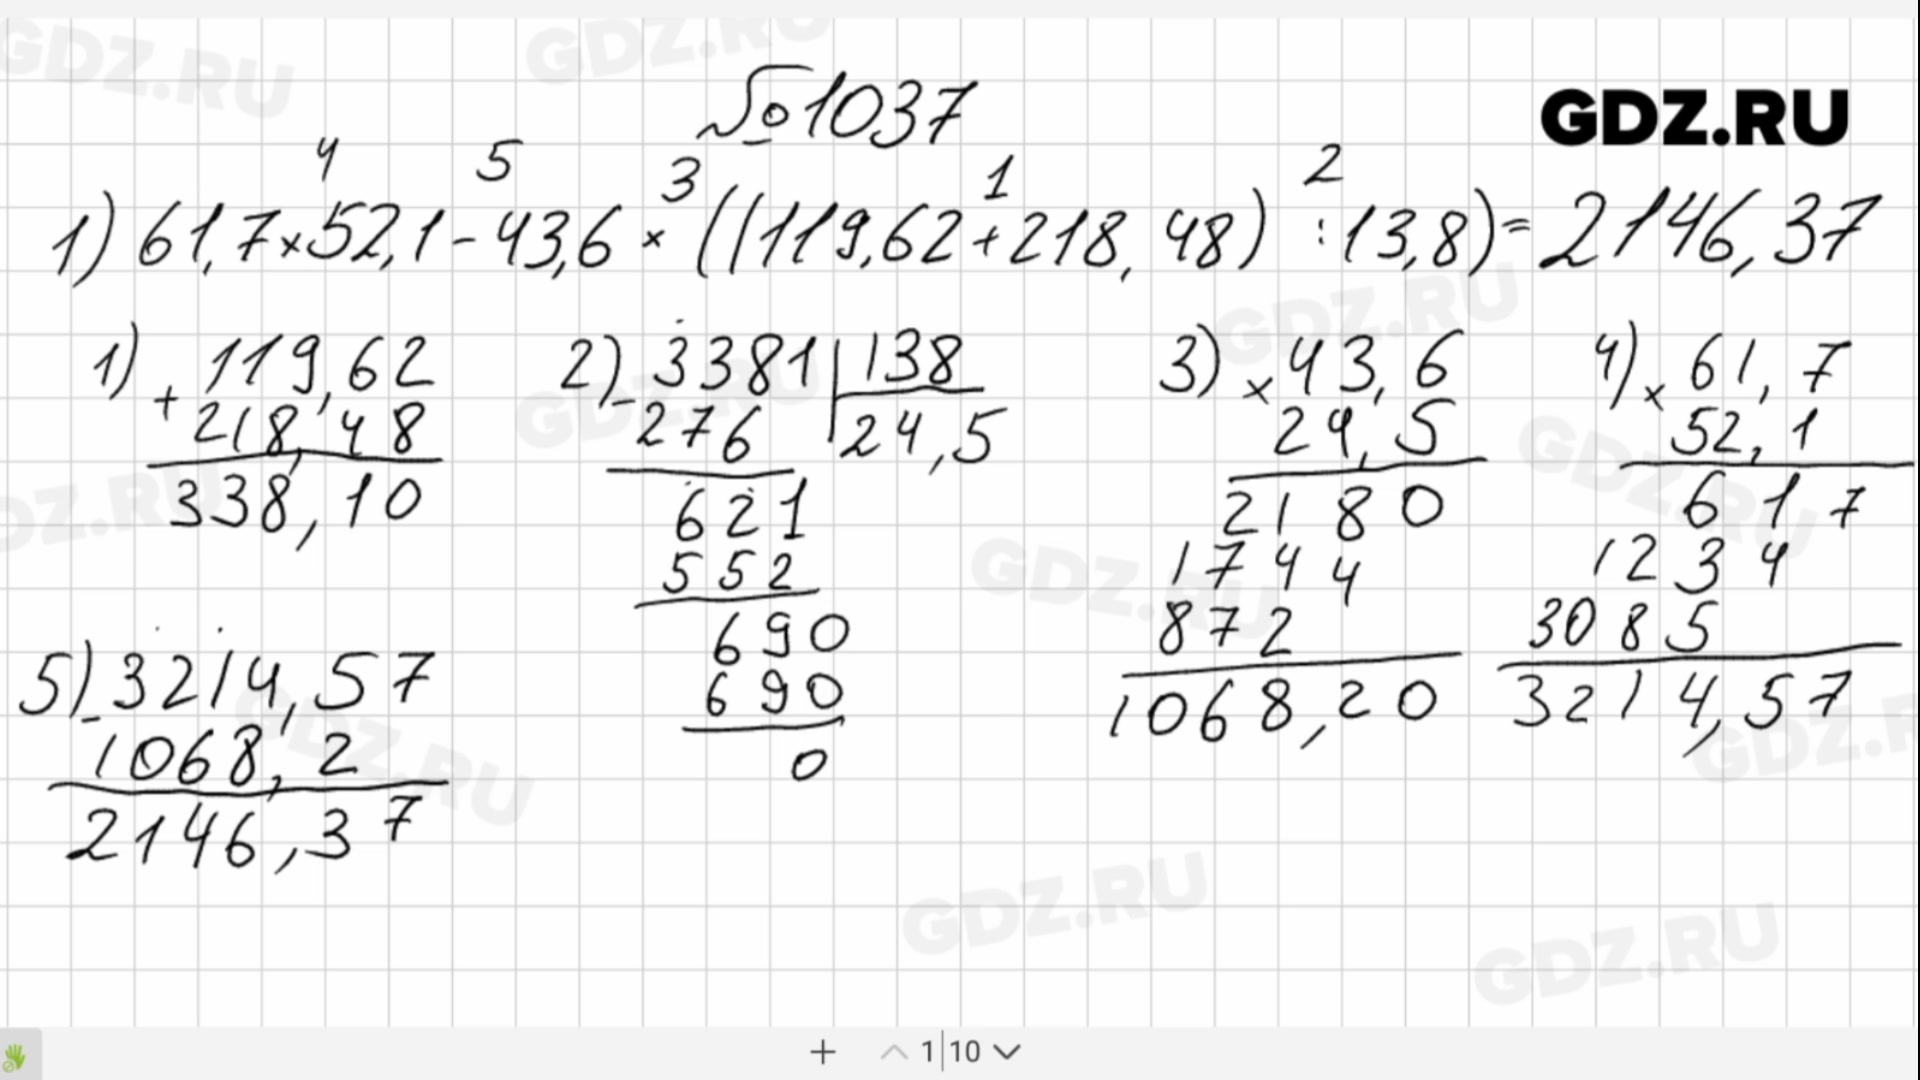 Математика 6 класс номер 1037 мерзляк полонский